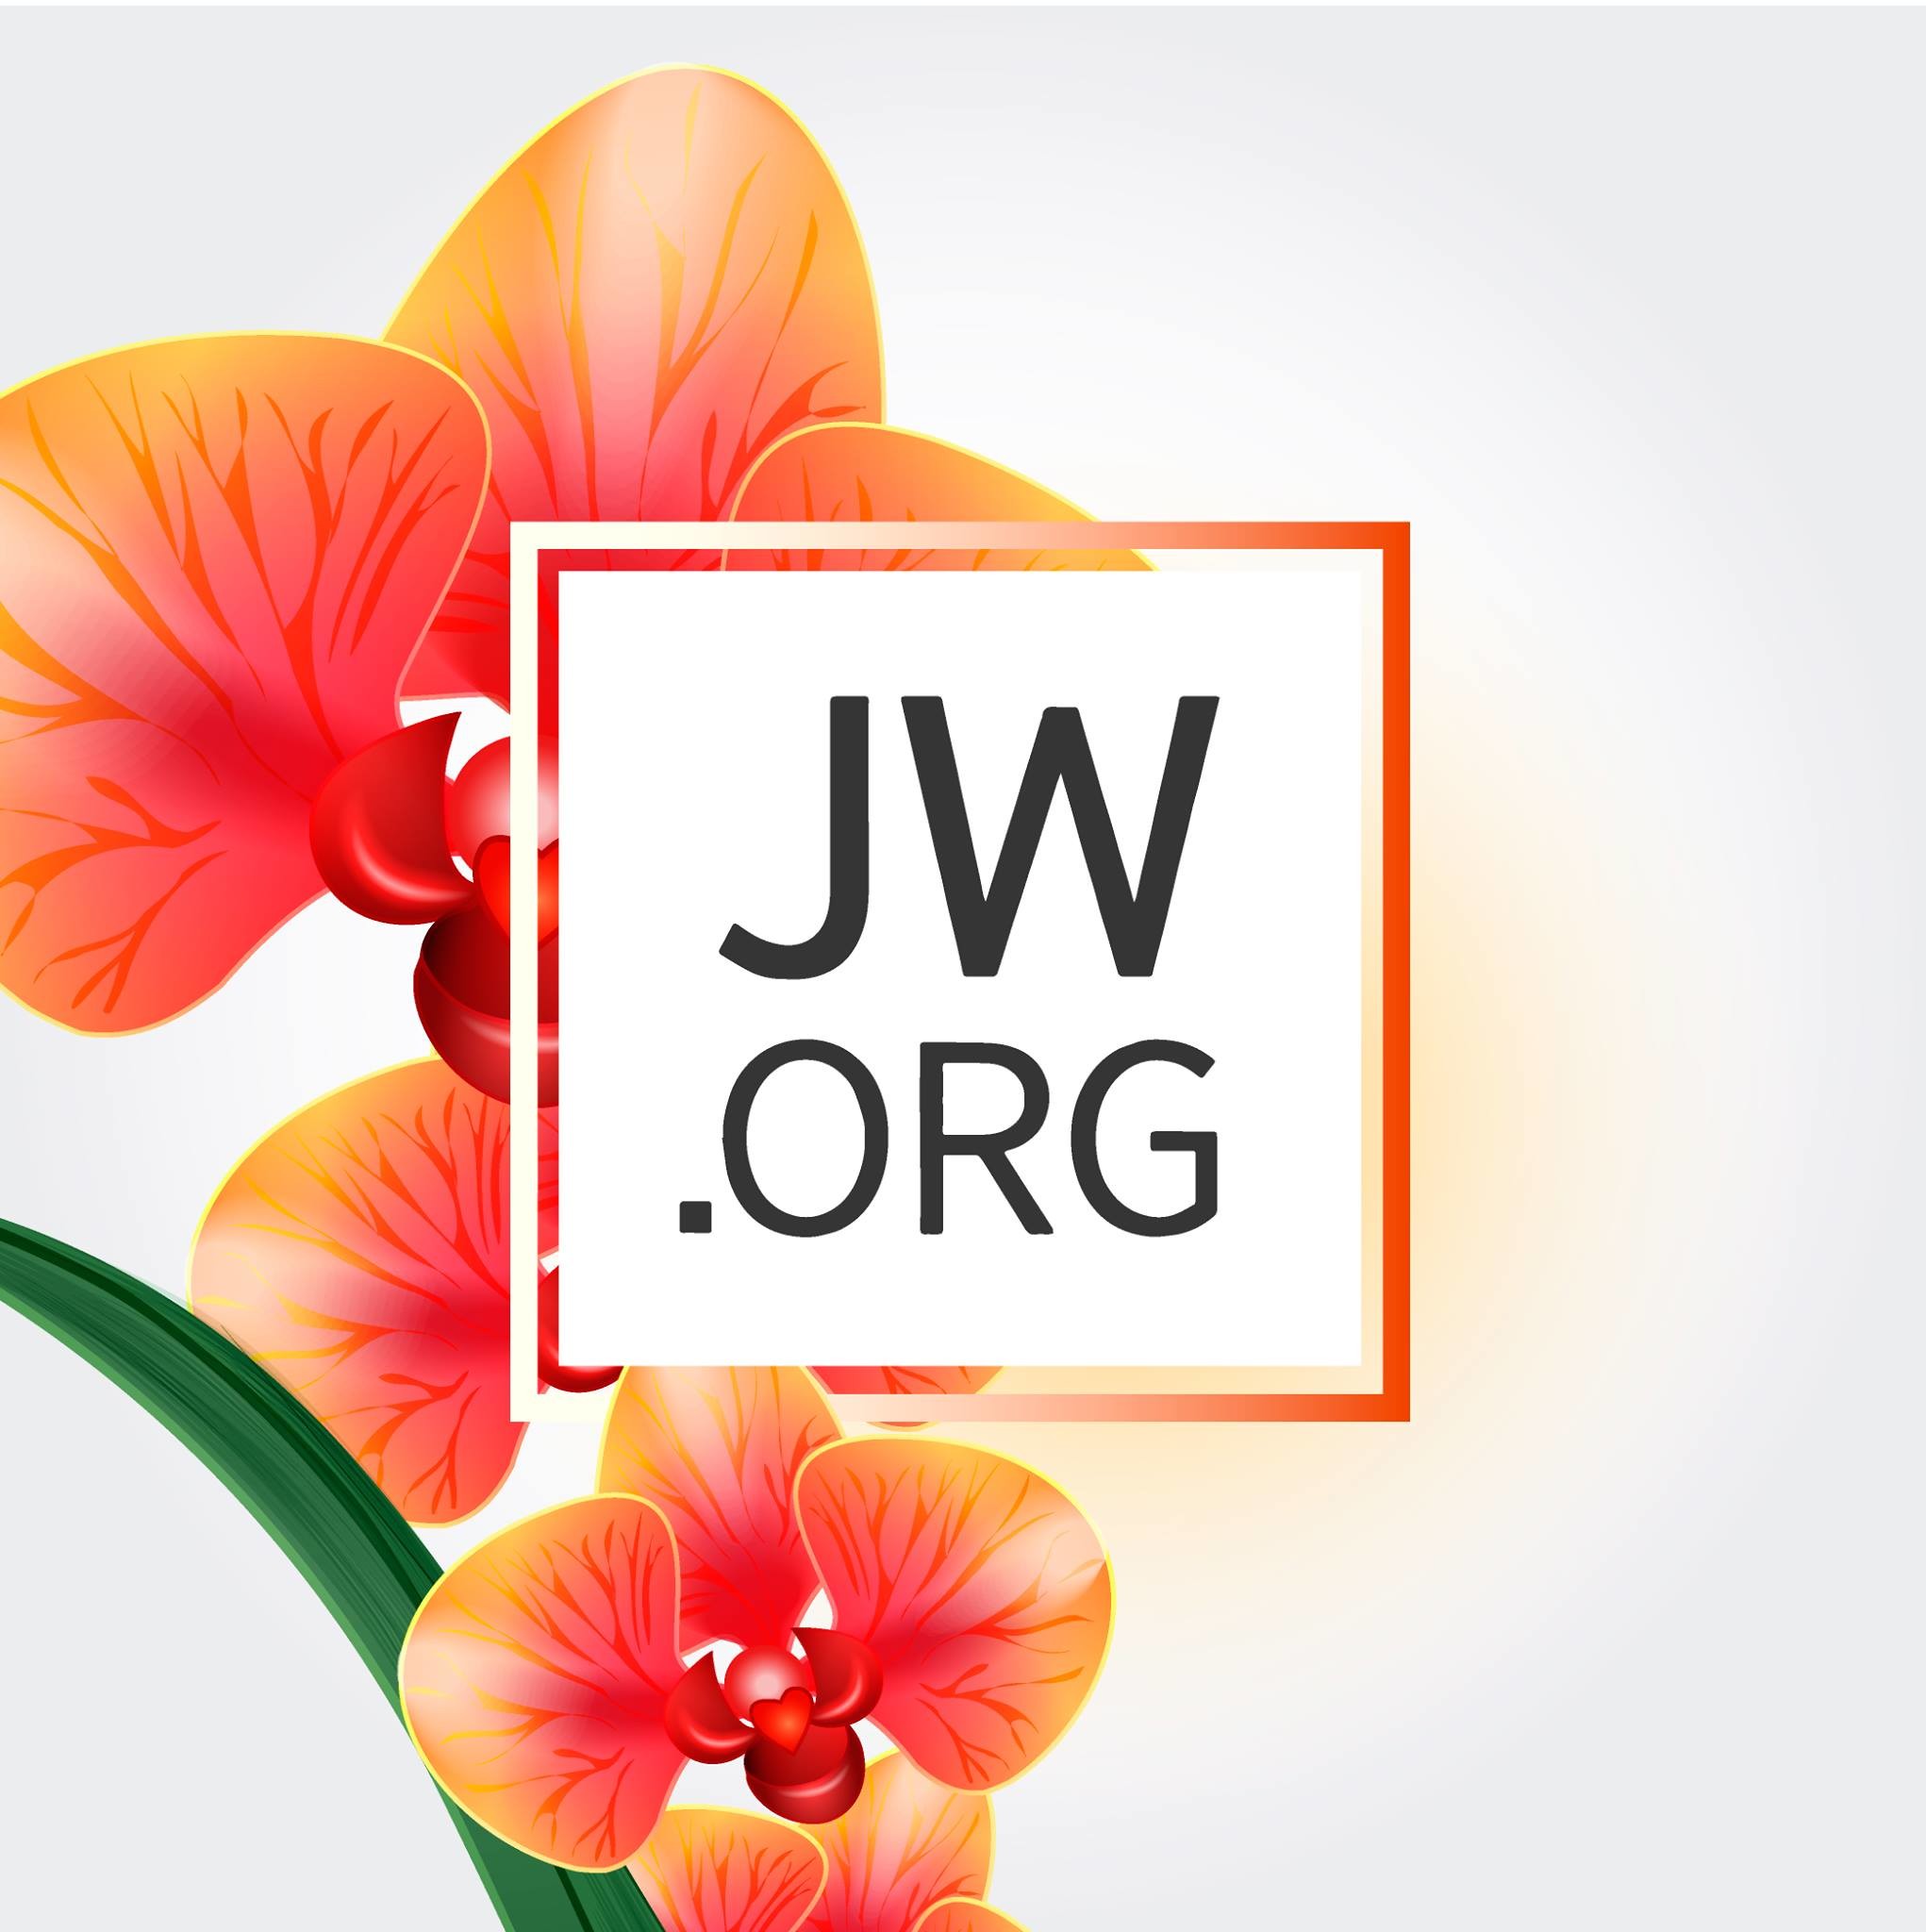 Https jw org. JW org. JW лого. JW org Wallpaper. Фон JW.